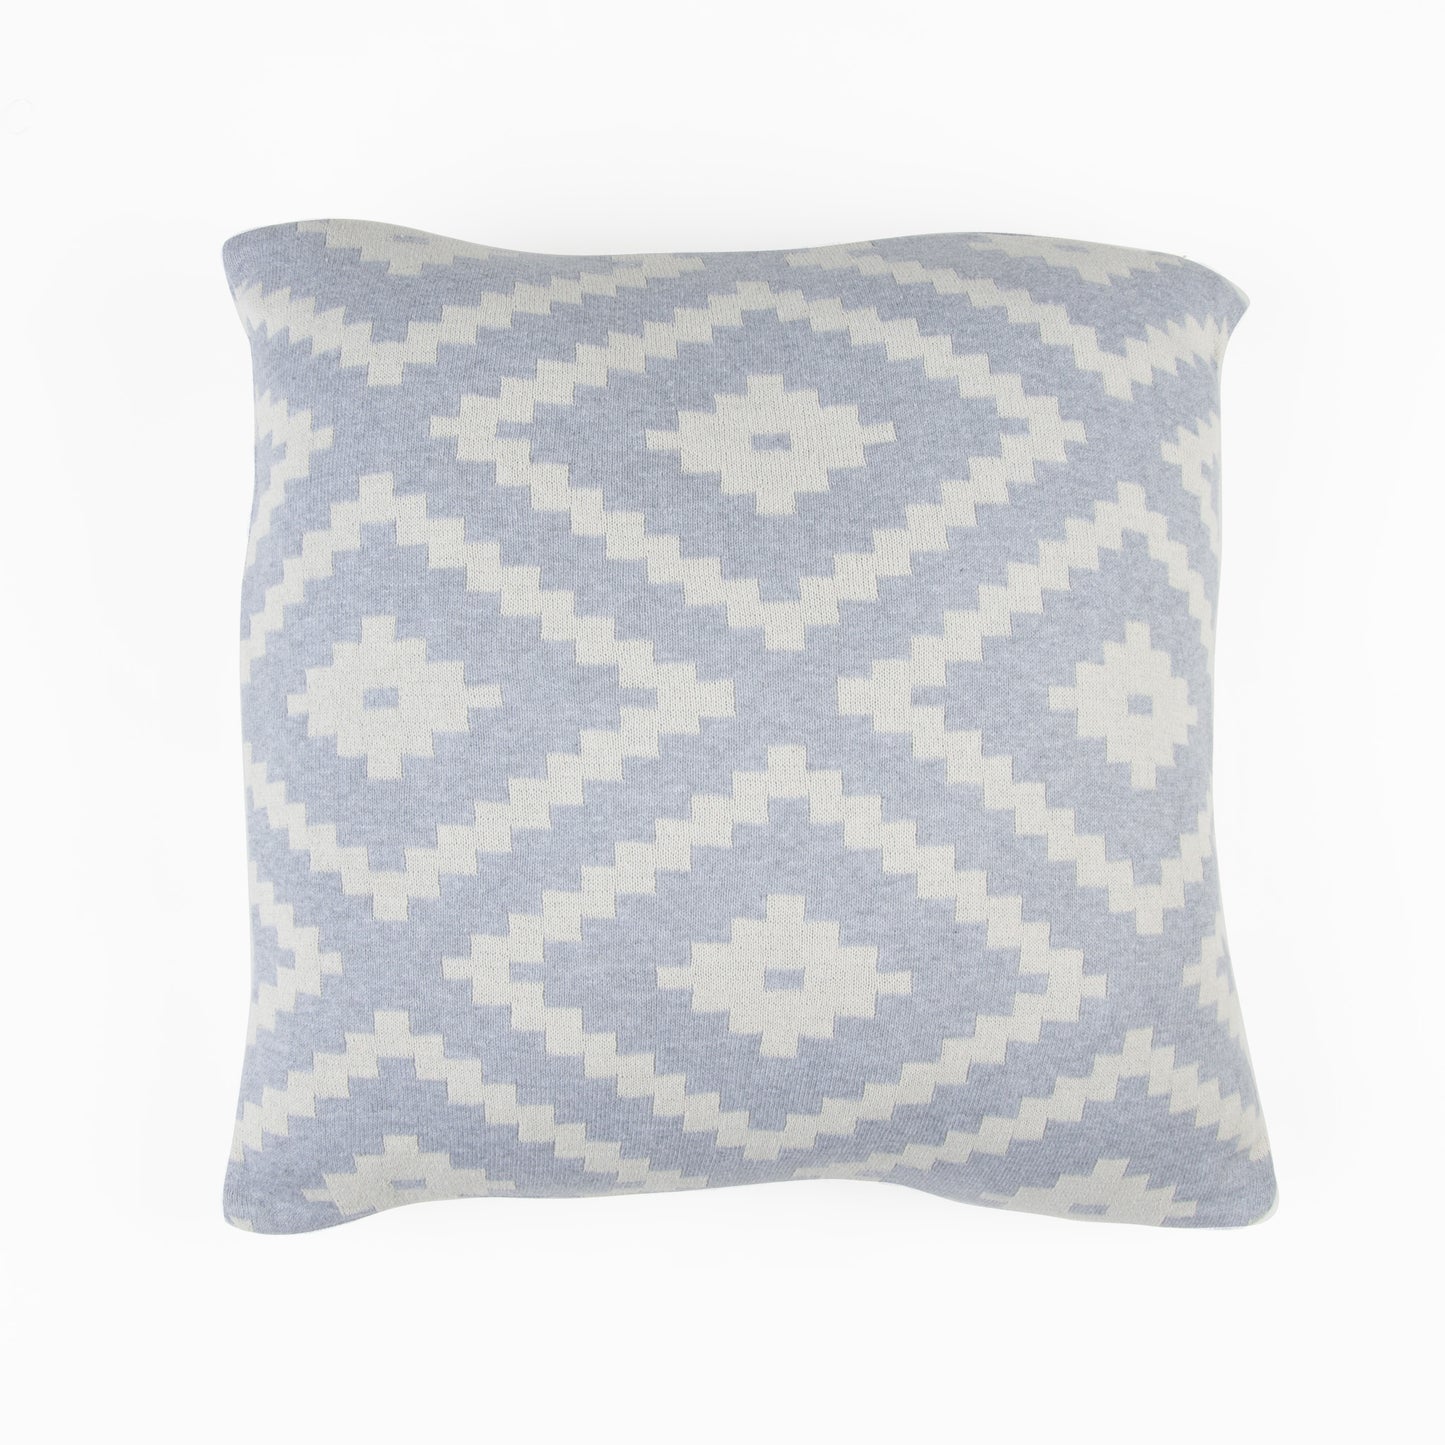 Auden 18x18" Recycled Cotton Decorative Throw Pillow